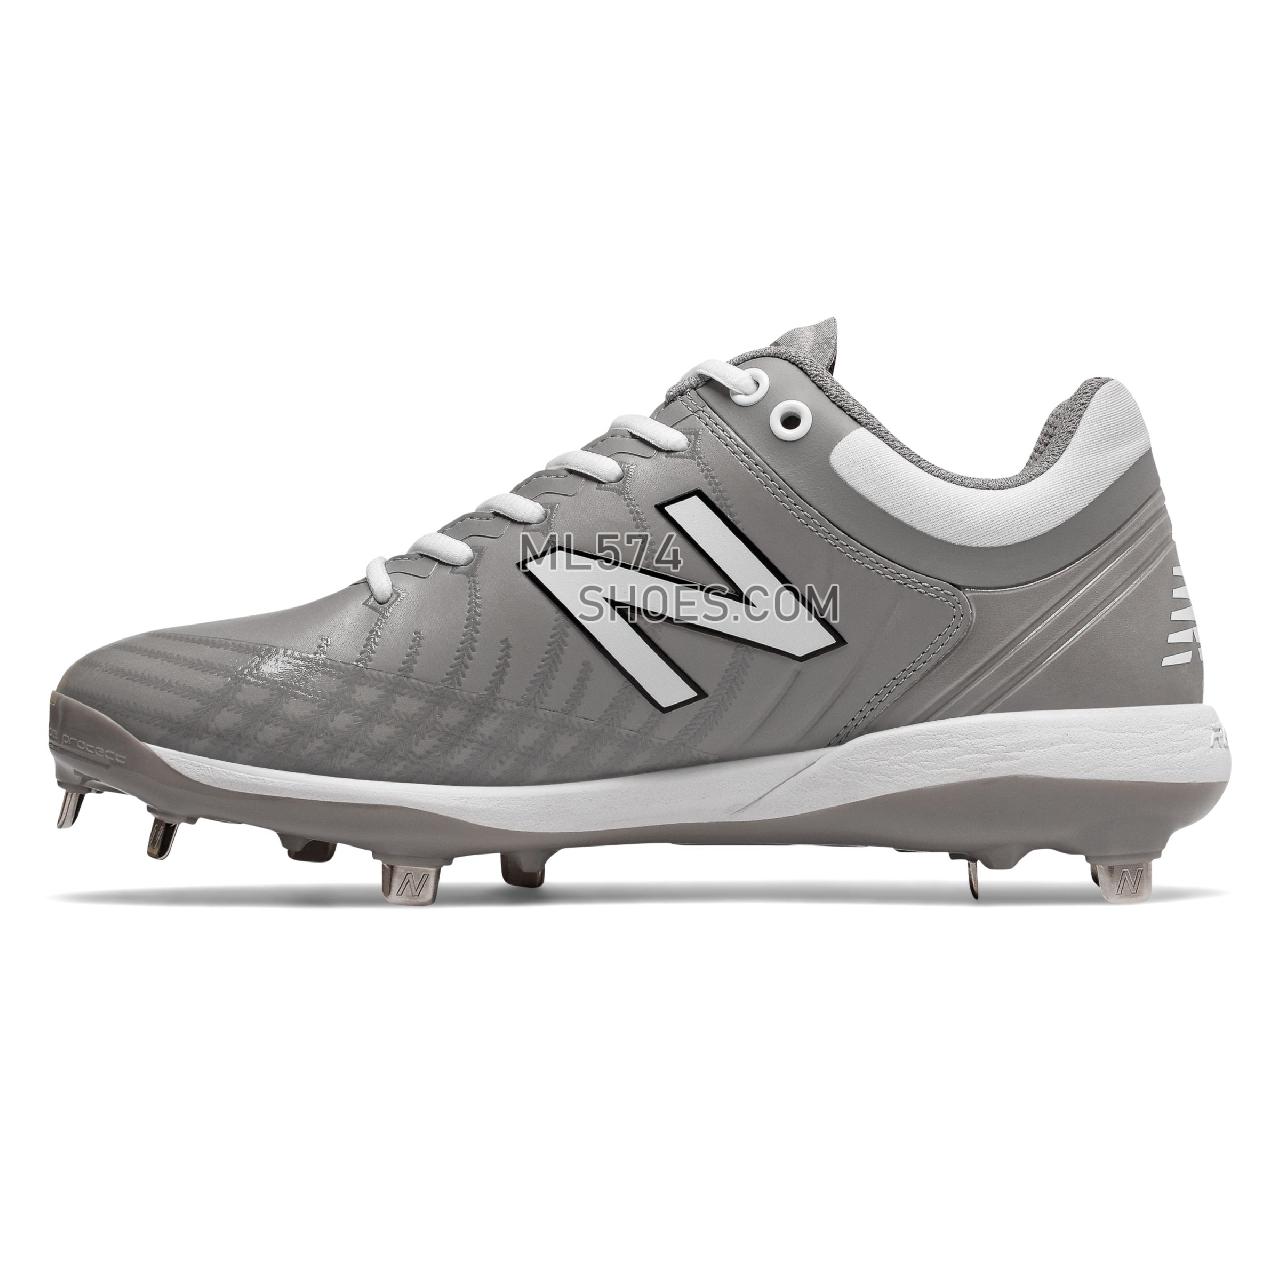 New Balance 4040v5 Metal - Men's Baseball Turf - Grey with White - L4040TG5